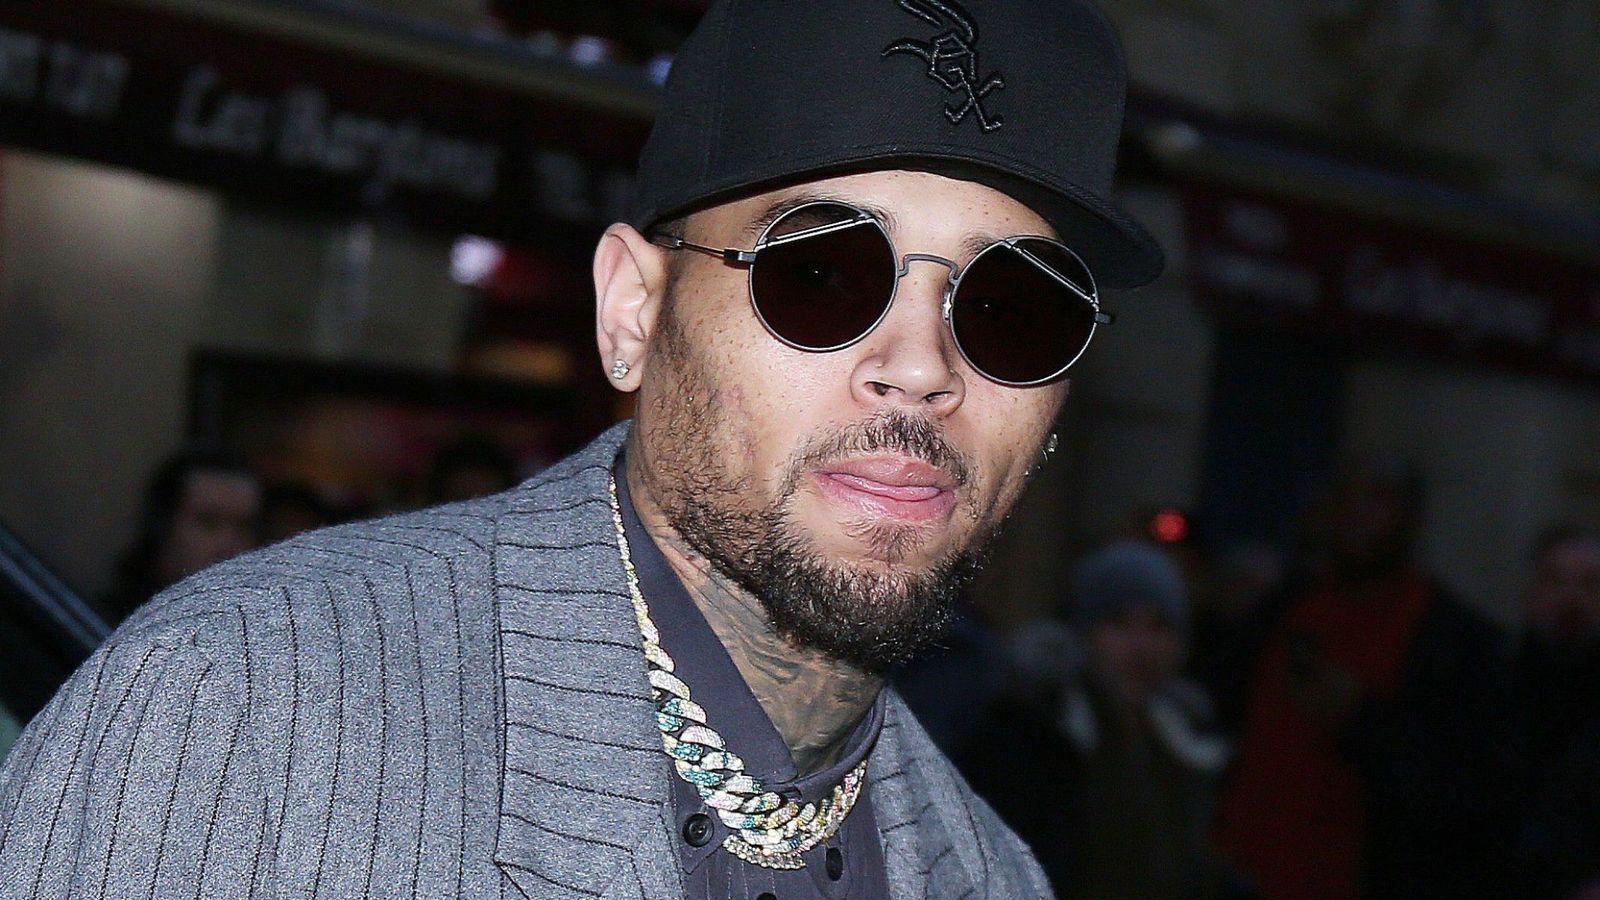 Singer Chris Brown detained in Paris on suspicion of rape